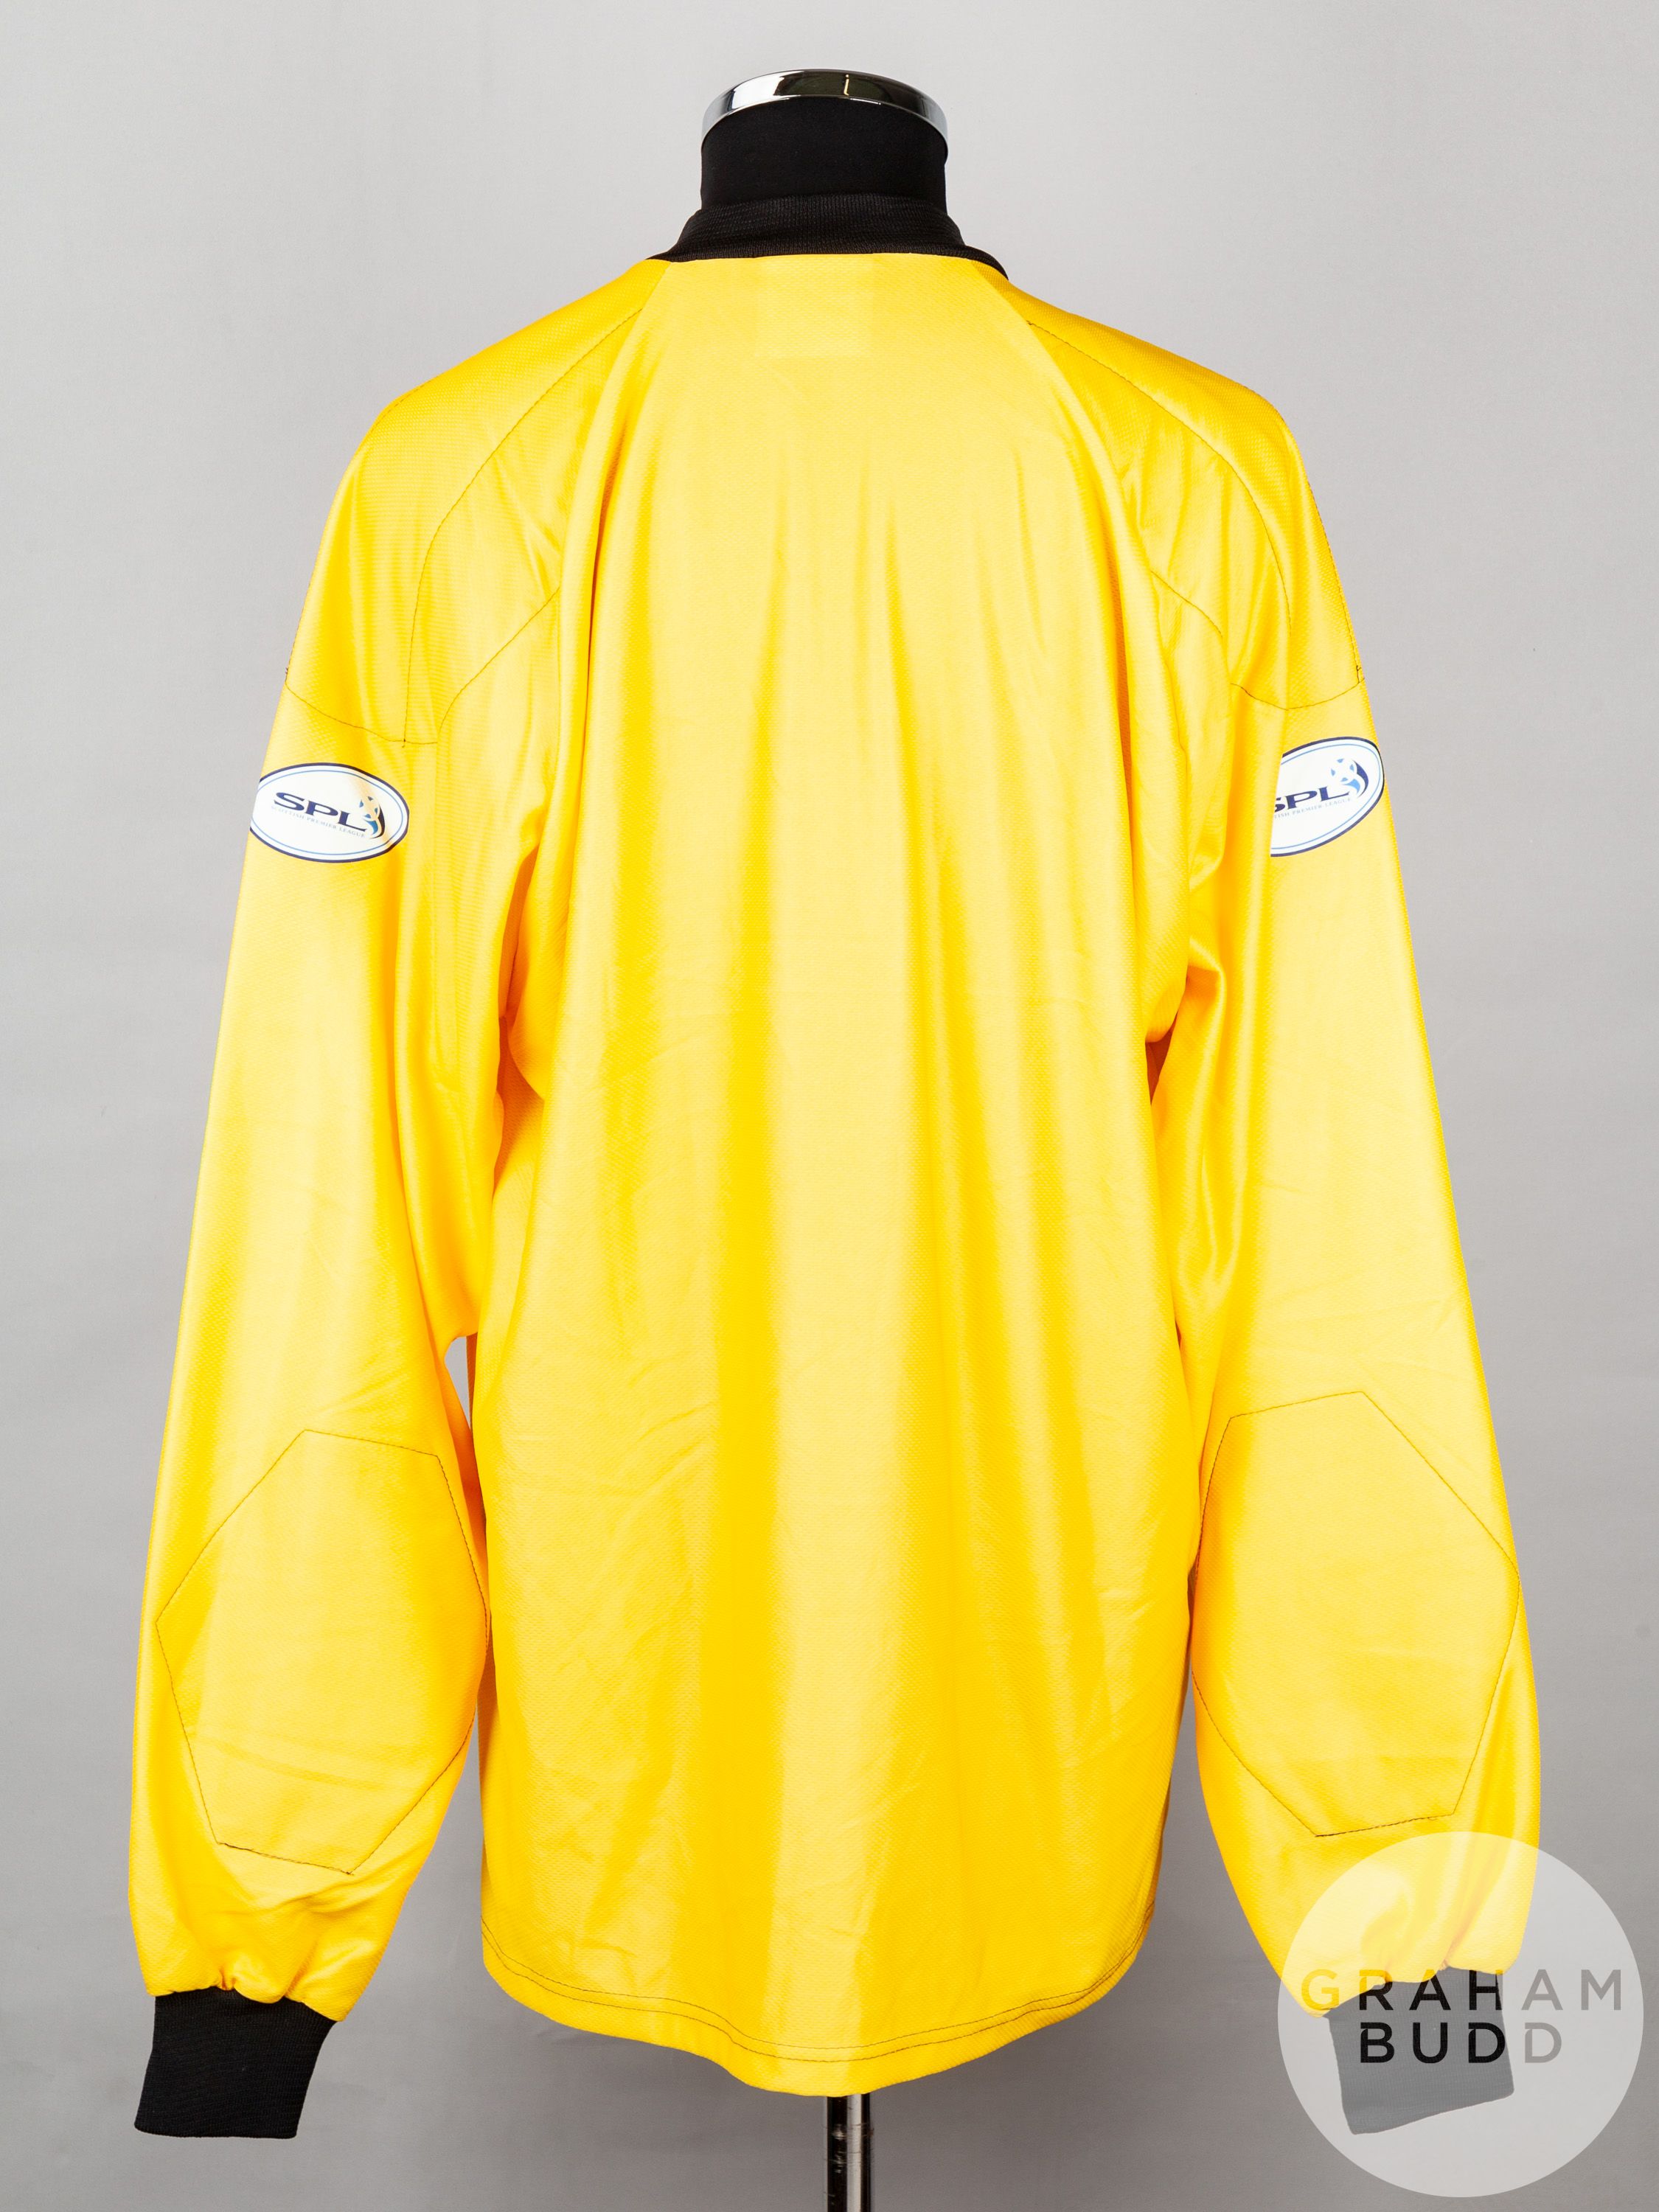 Yellow and black Heart of Midlothian goalkeepers long-sleeved shirt, 1998-99, - Image 2 of 5